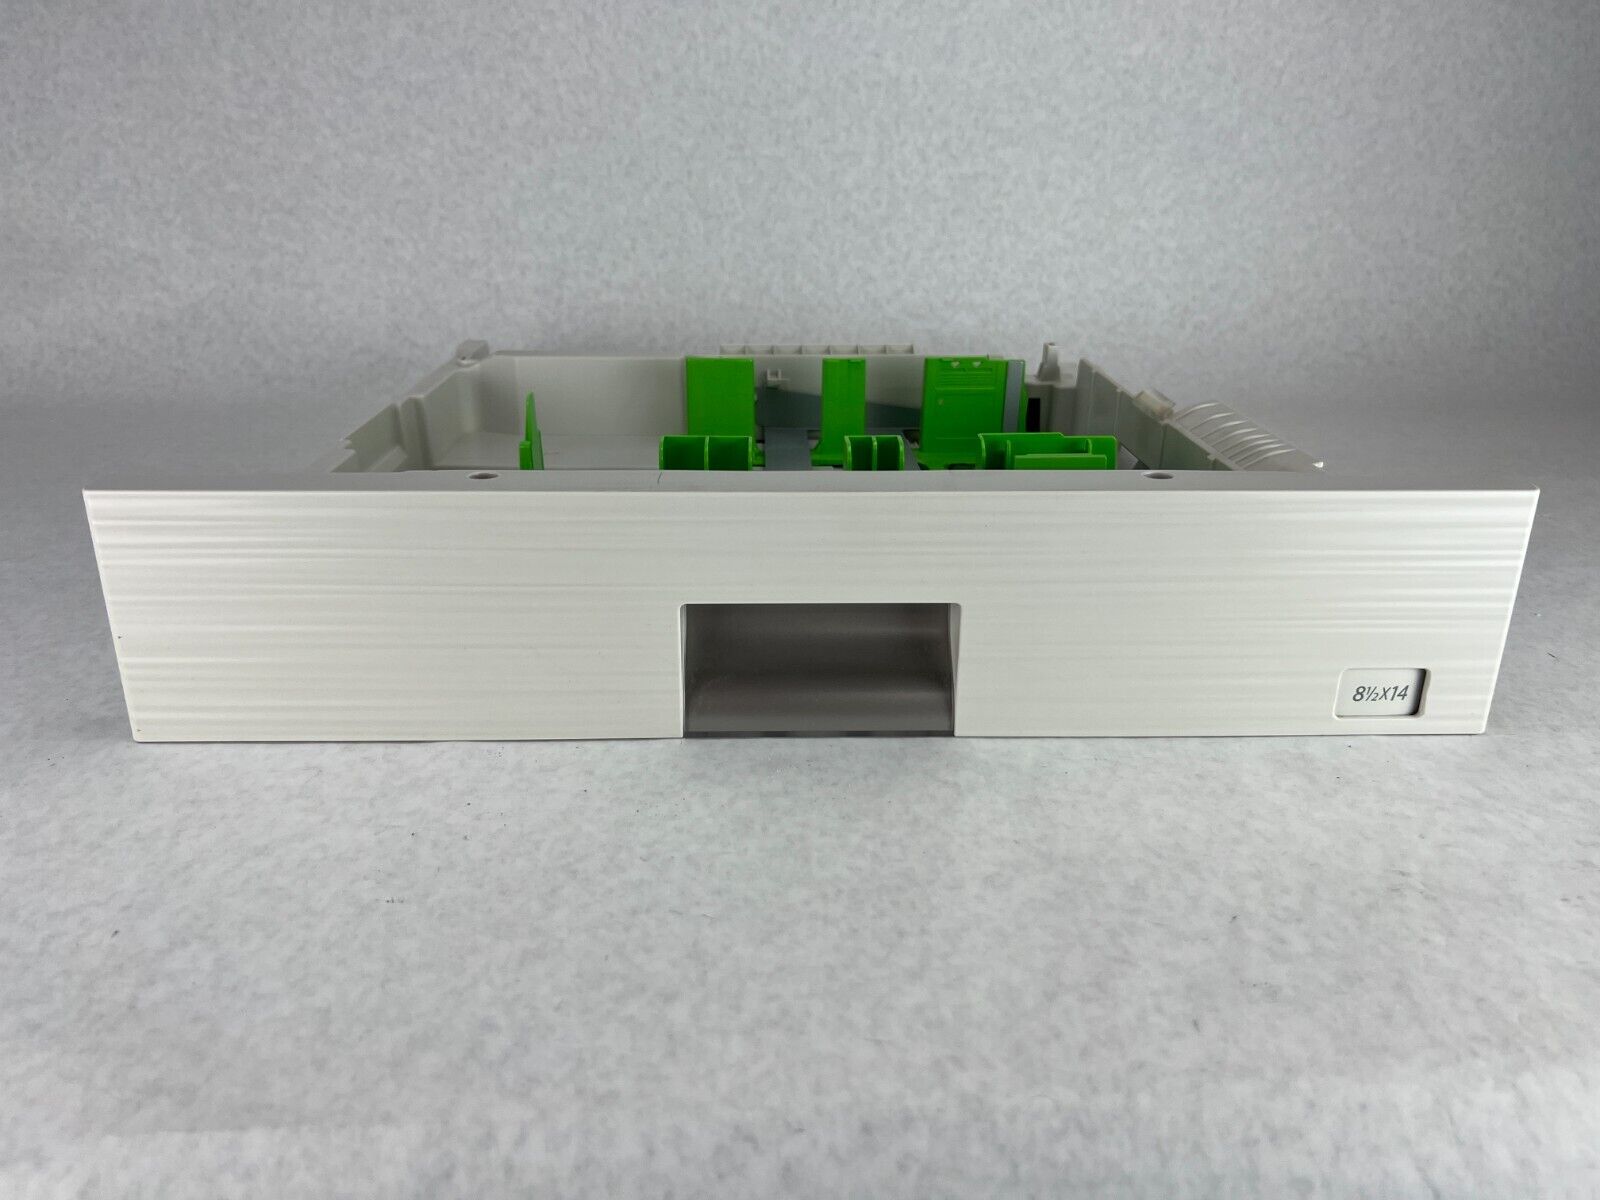 Sharp MX-M283N Office Copier Printer Paper Tray 8 1/2 X 14